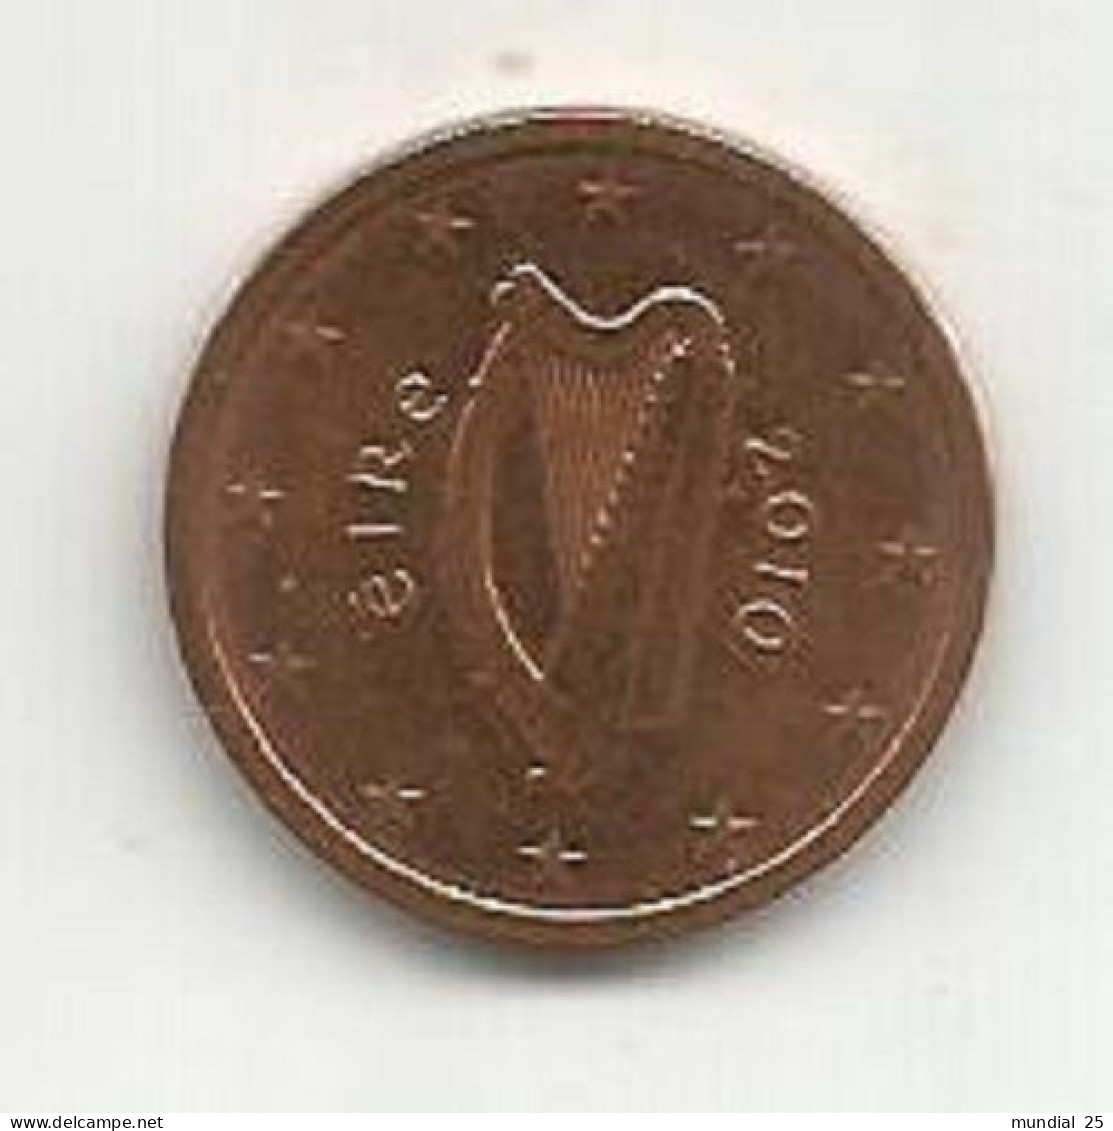 IRELAND 2 EURO CENT 2010 - Ierland